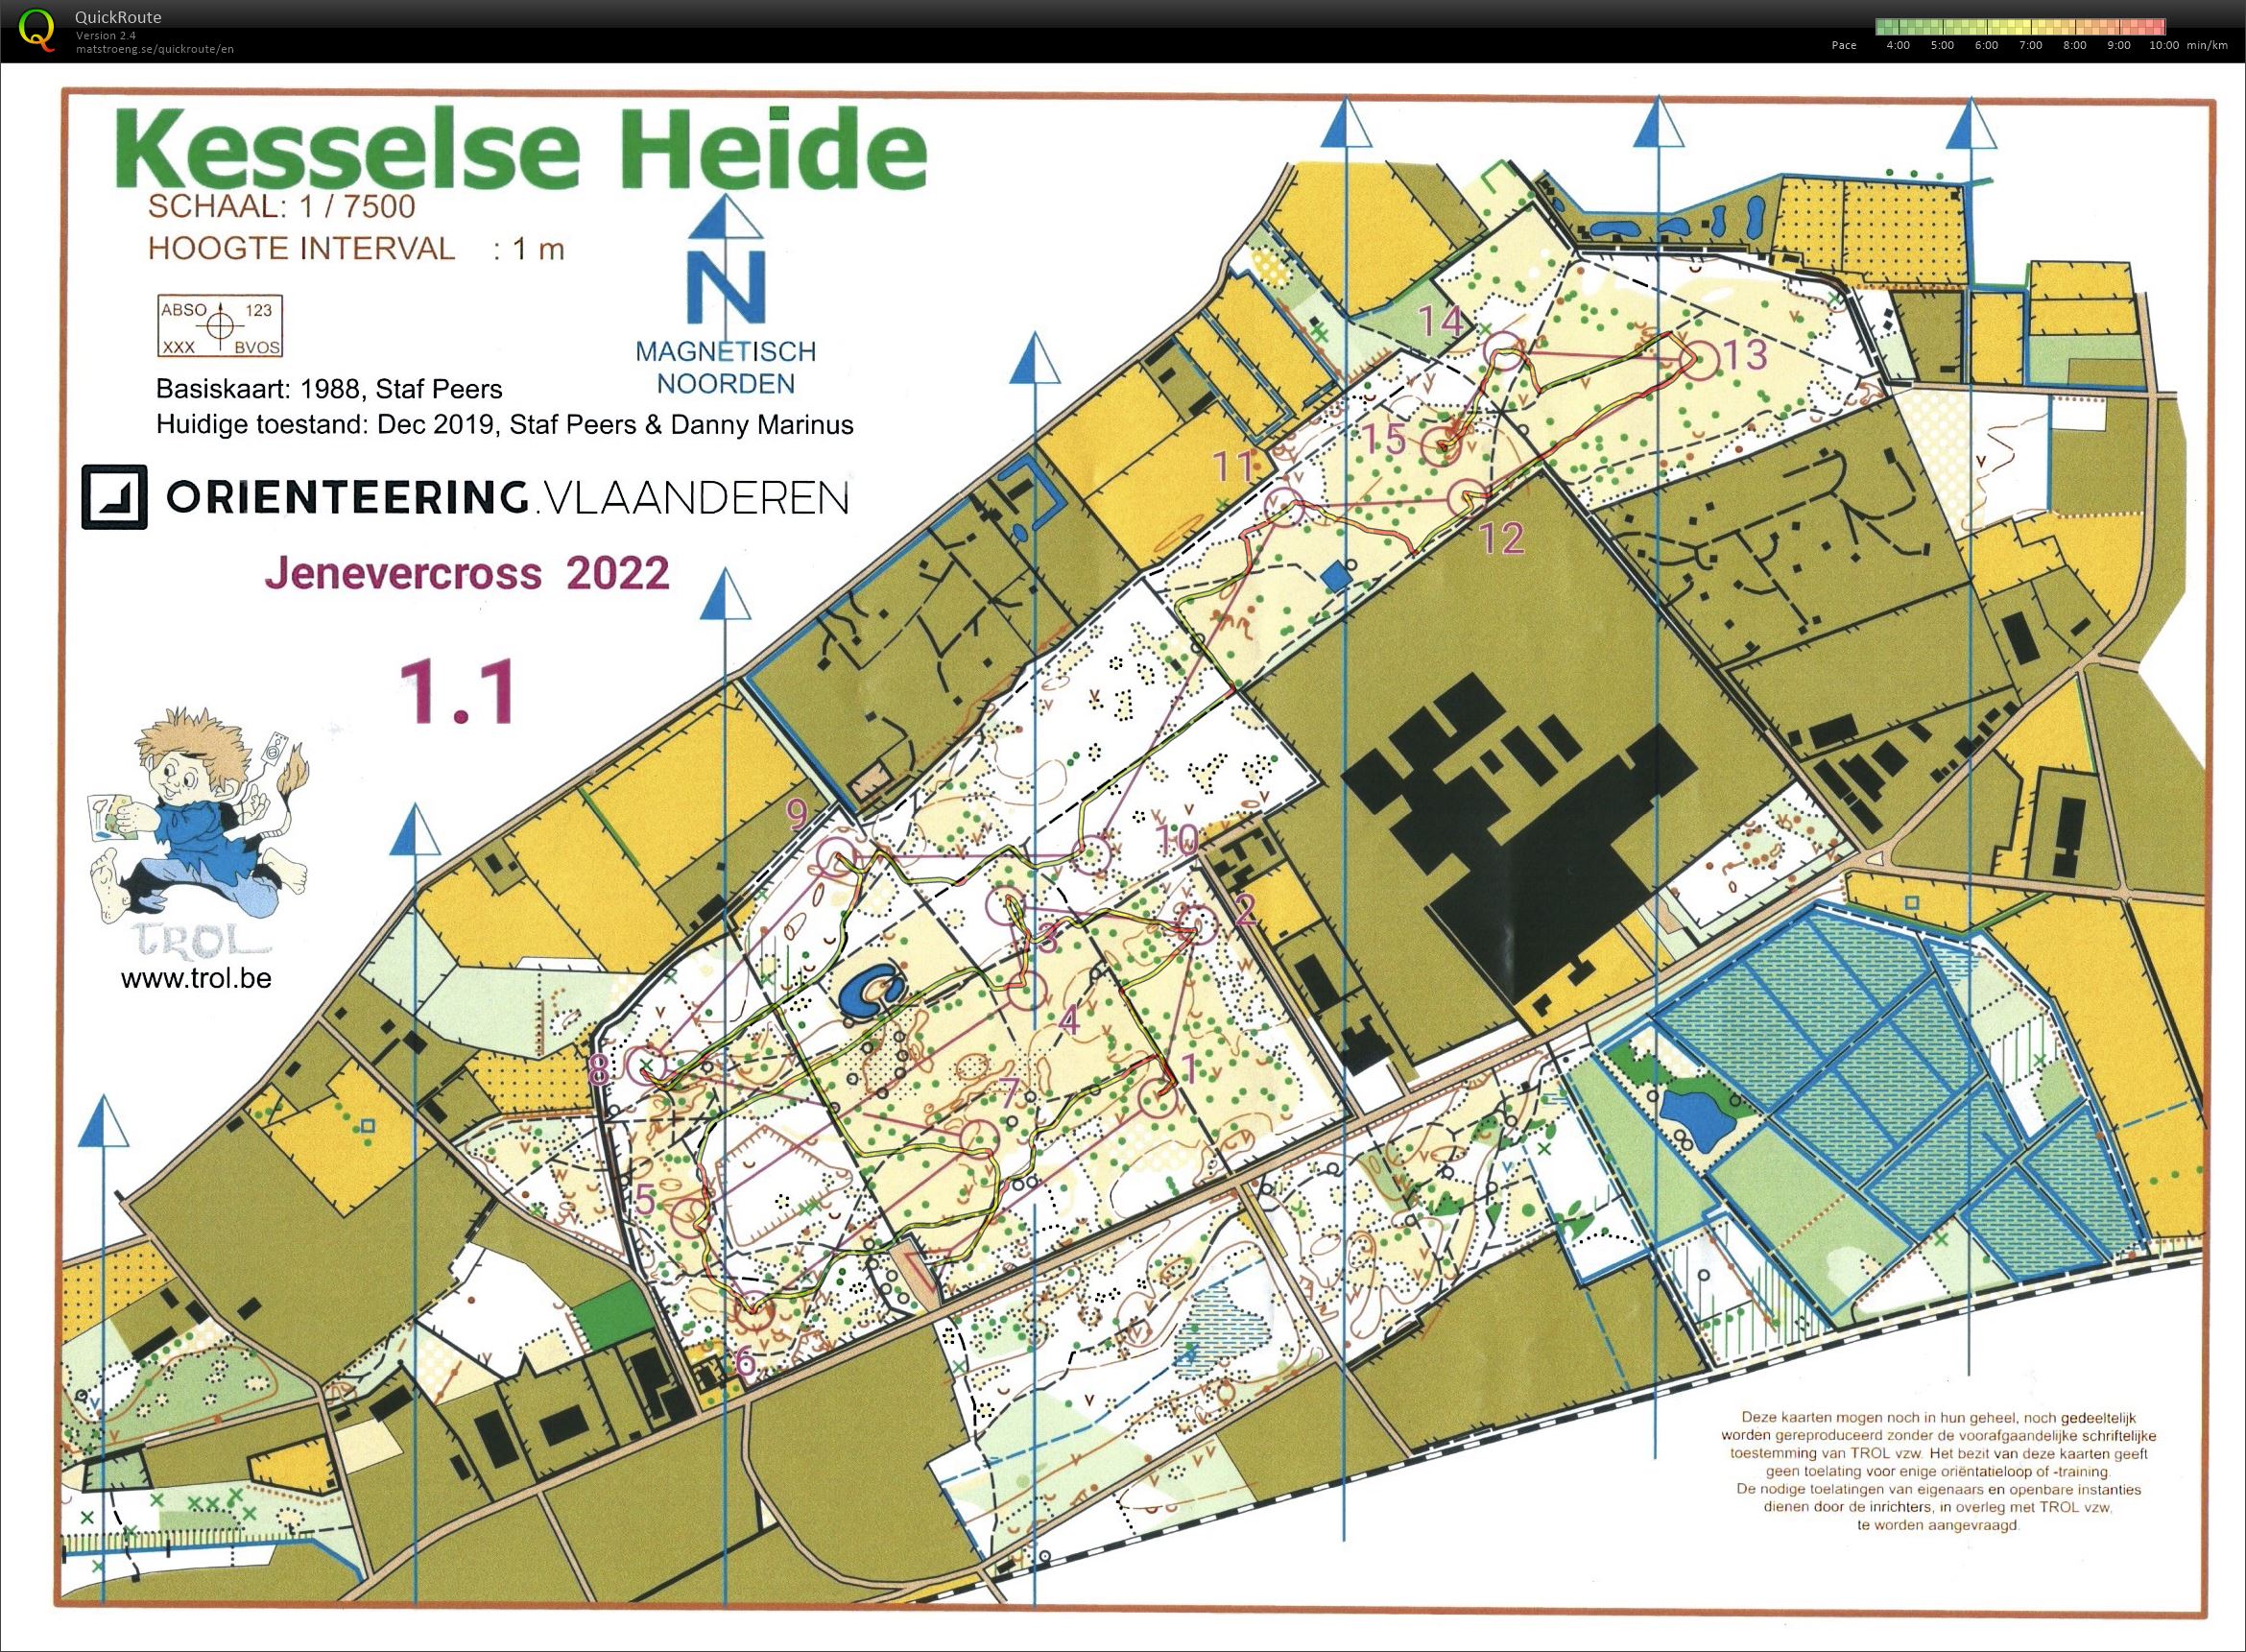 Jenevercross 2022 - Kesselse Heide - 1.1 (2022-01-07)